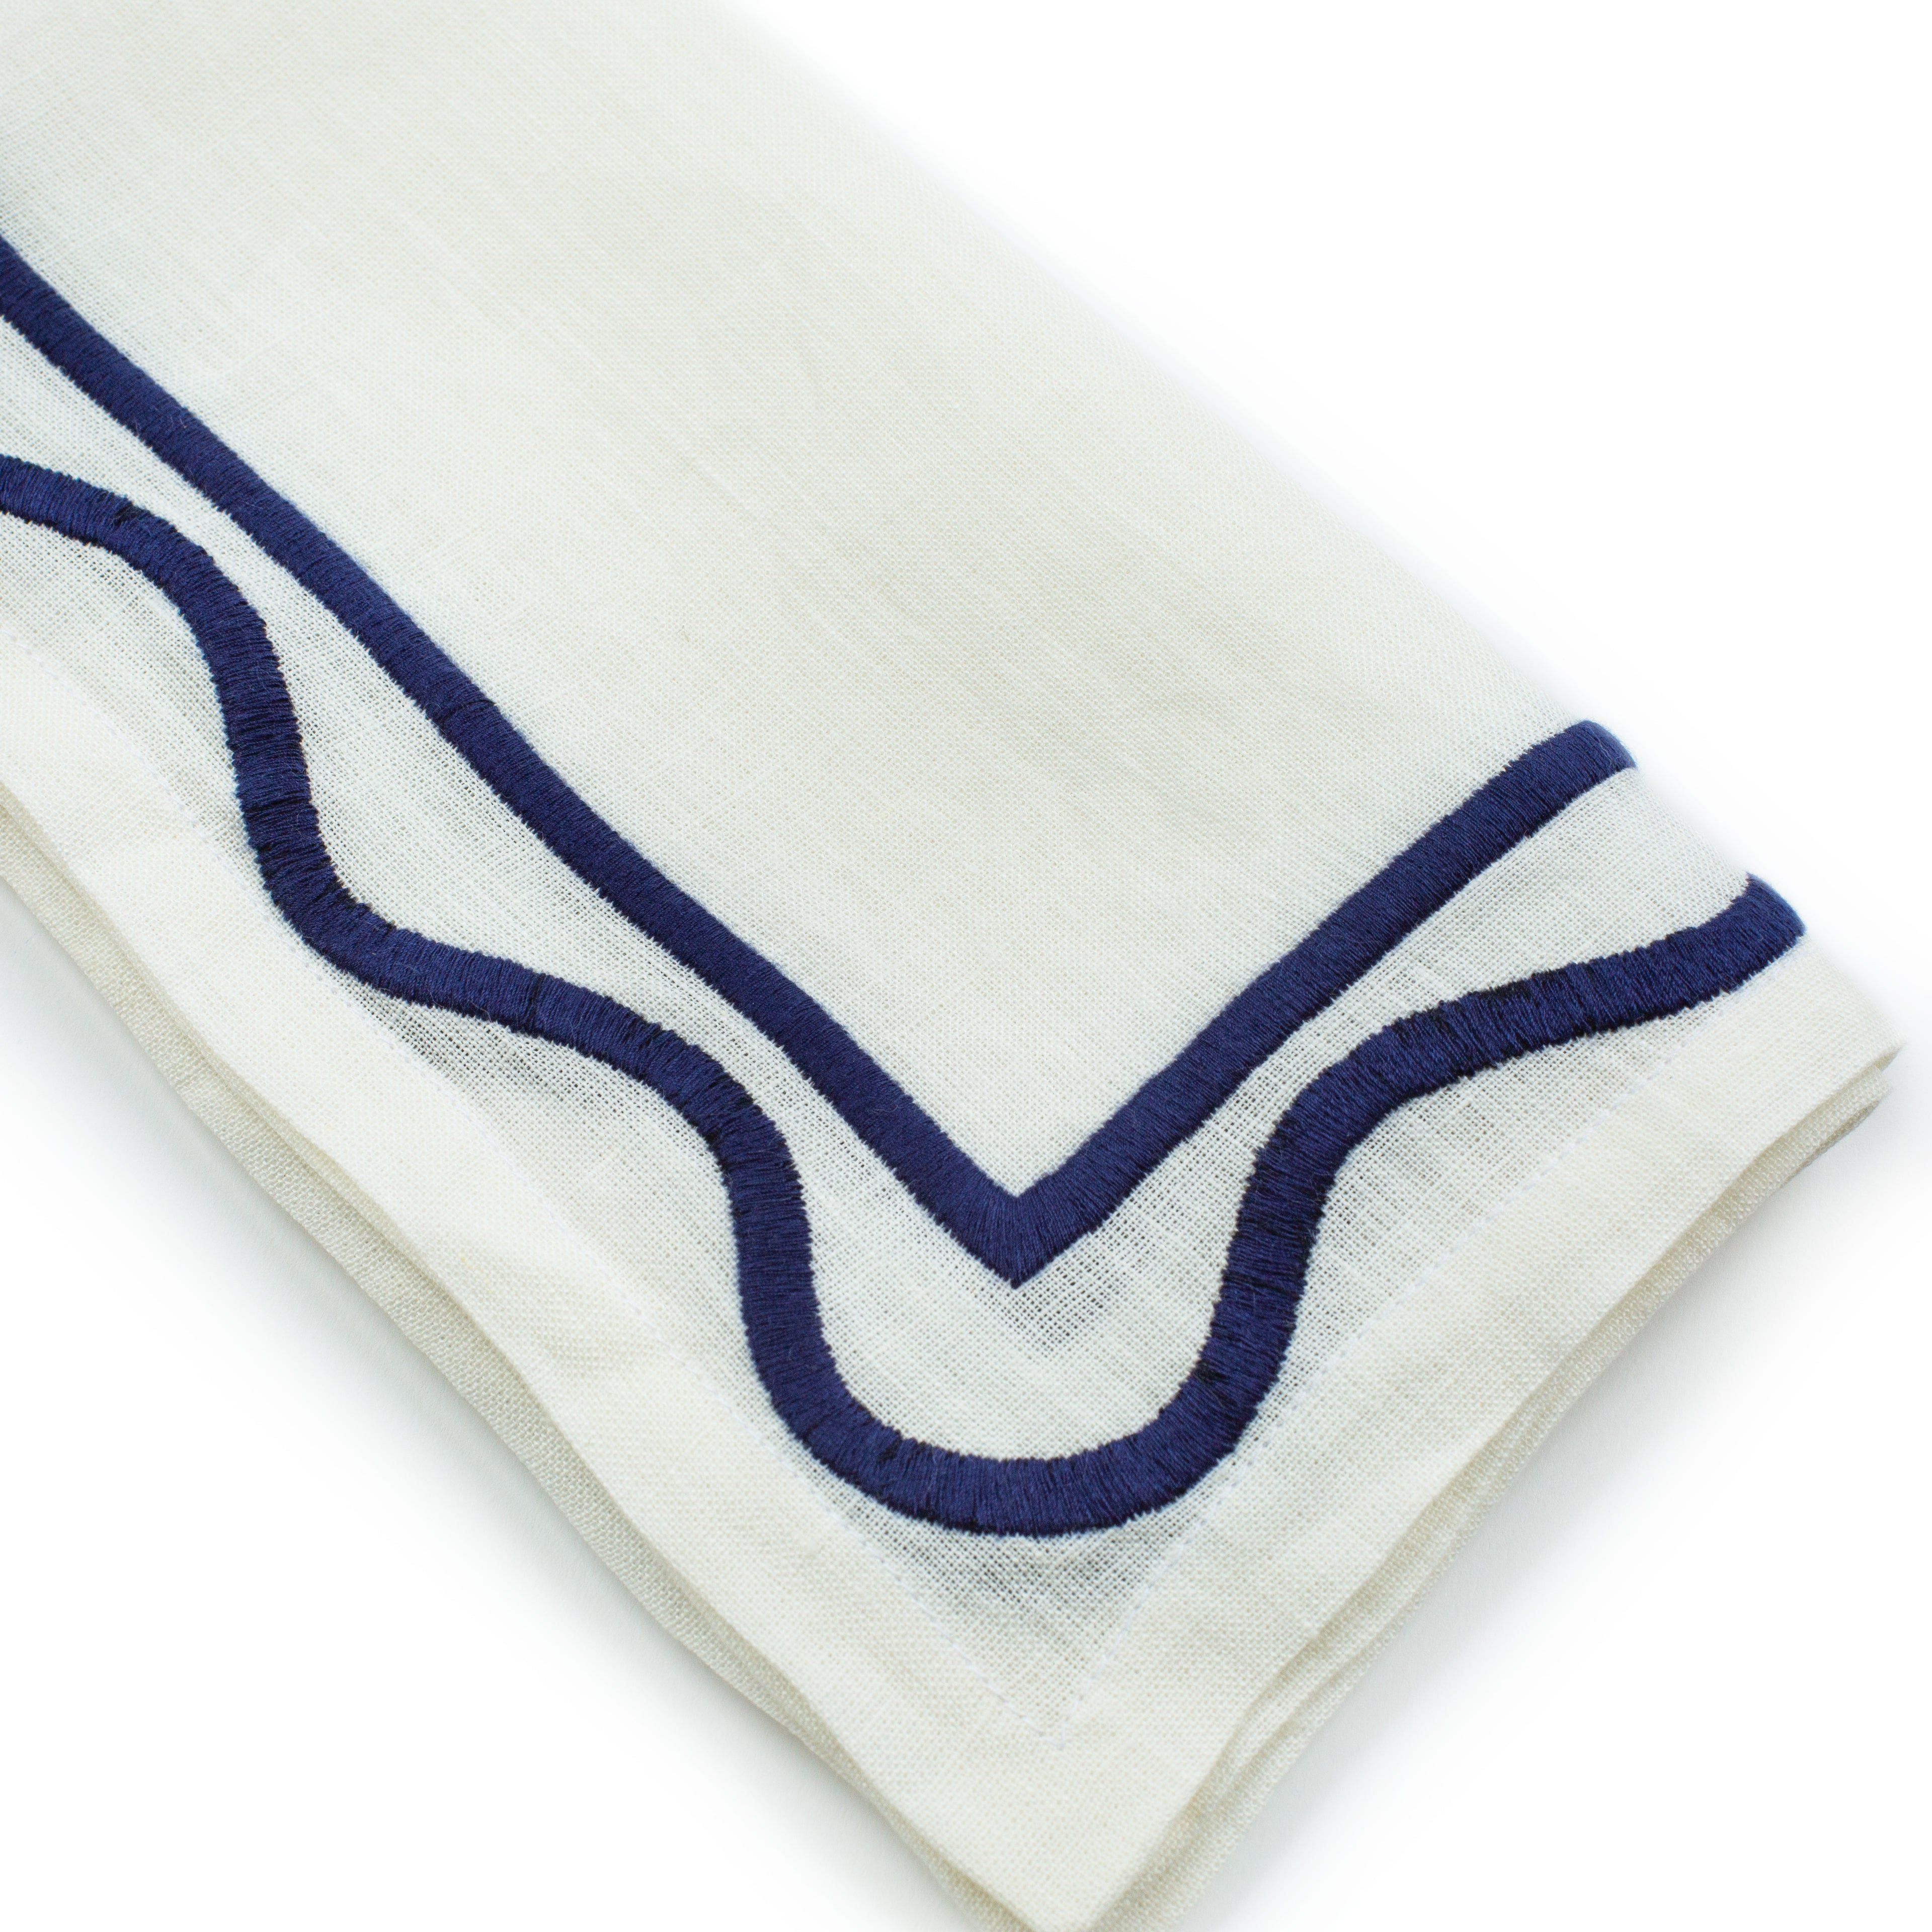 Colorblock Embroidered Linen Napkins in Dark Blue (Set of 4)